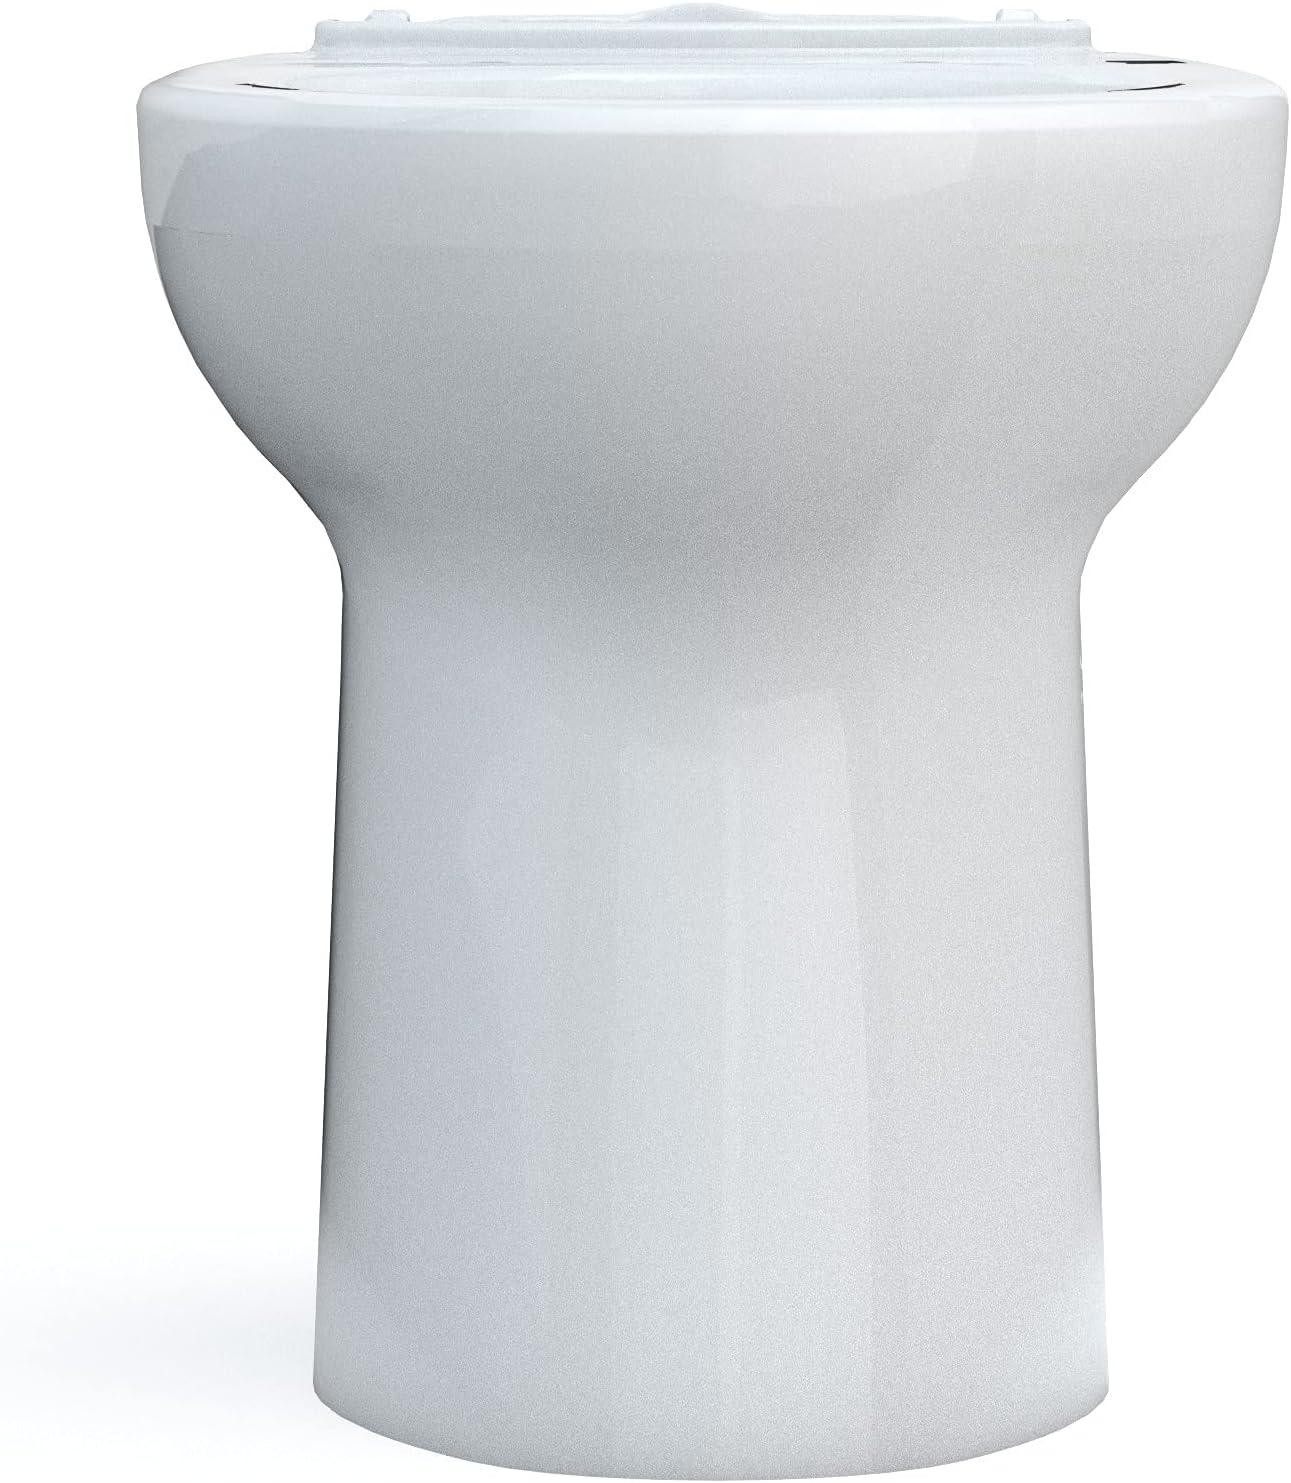 Elegant Cotton White Elongated Universal Tornado Flush Toilet Bowl